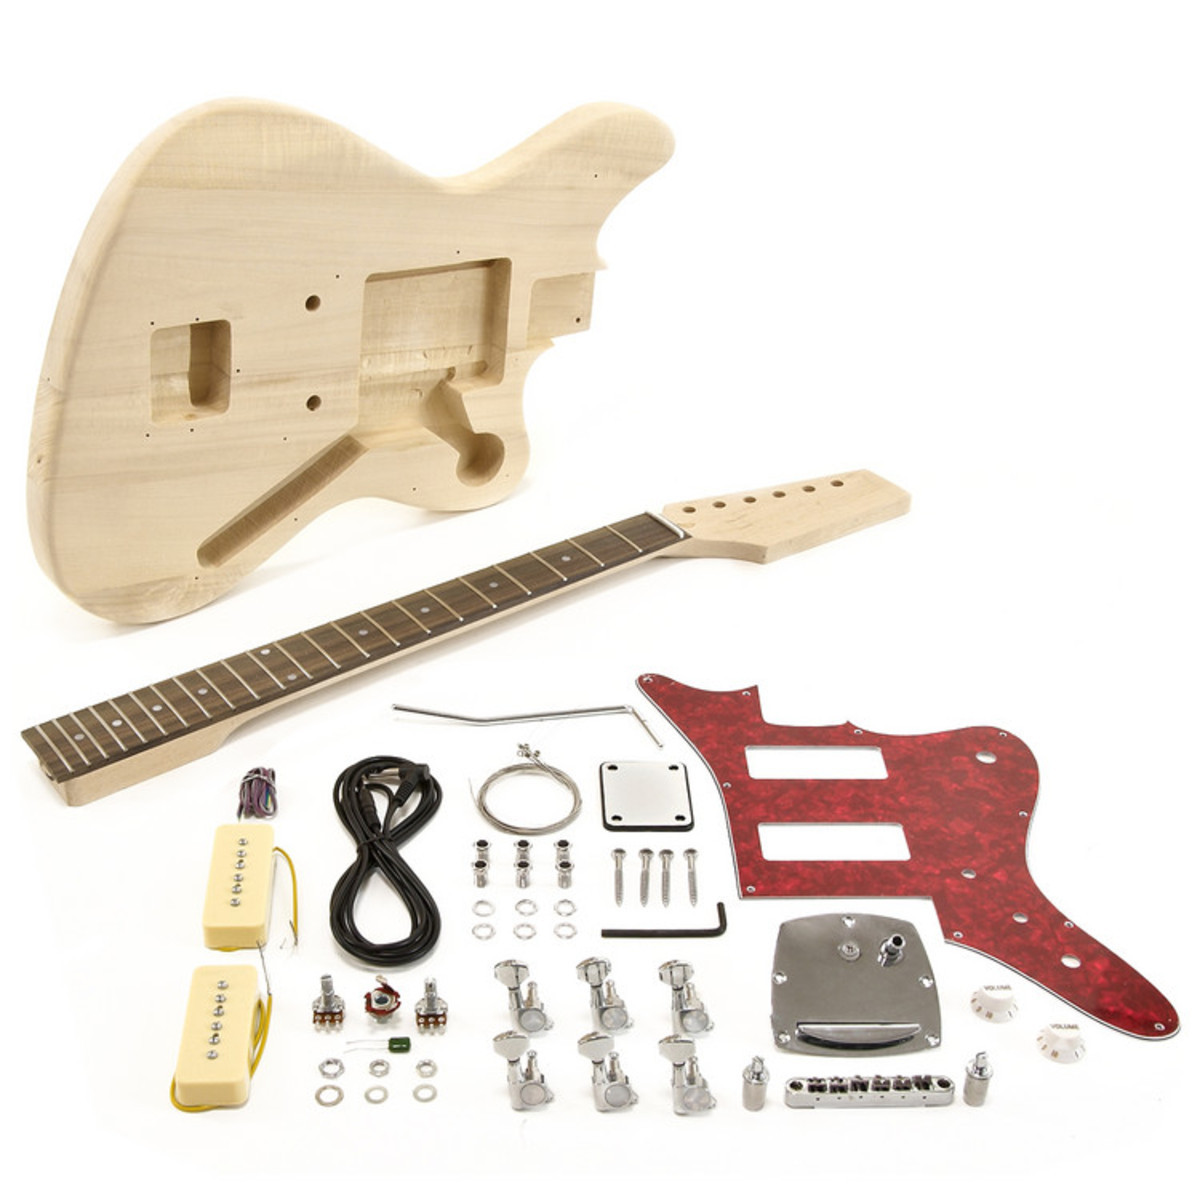 DIY Electric Guitar Kits
 Seattle Jazz Electric Guitar DIY Kit at Gear4music